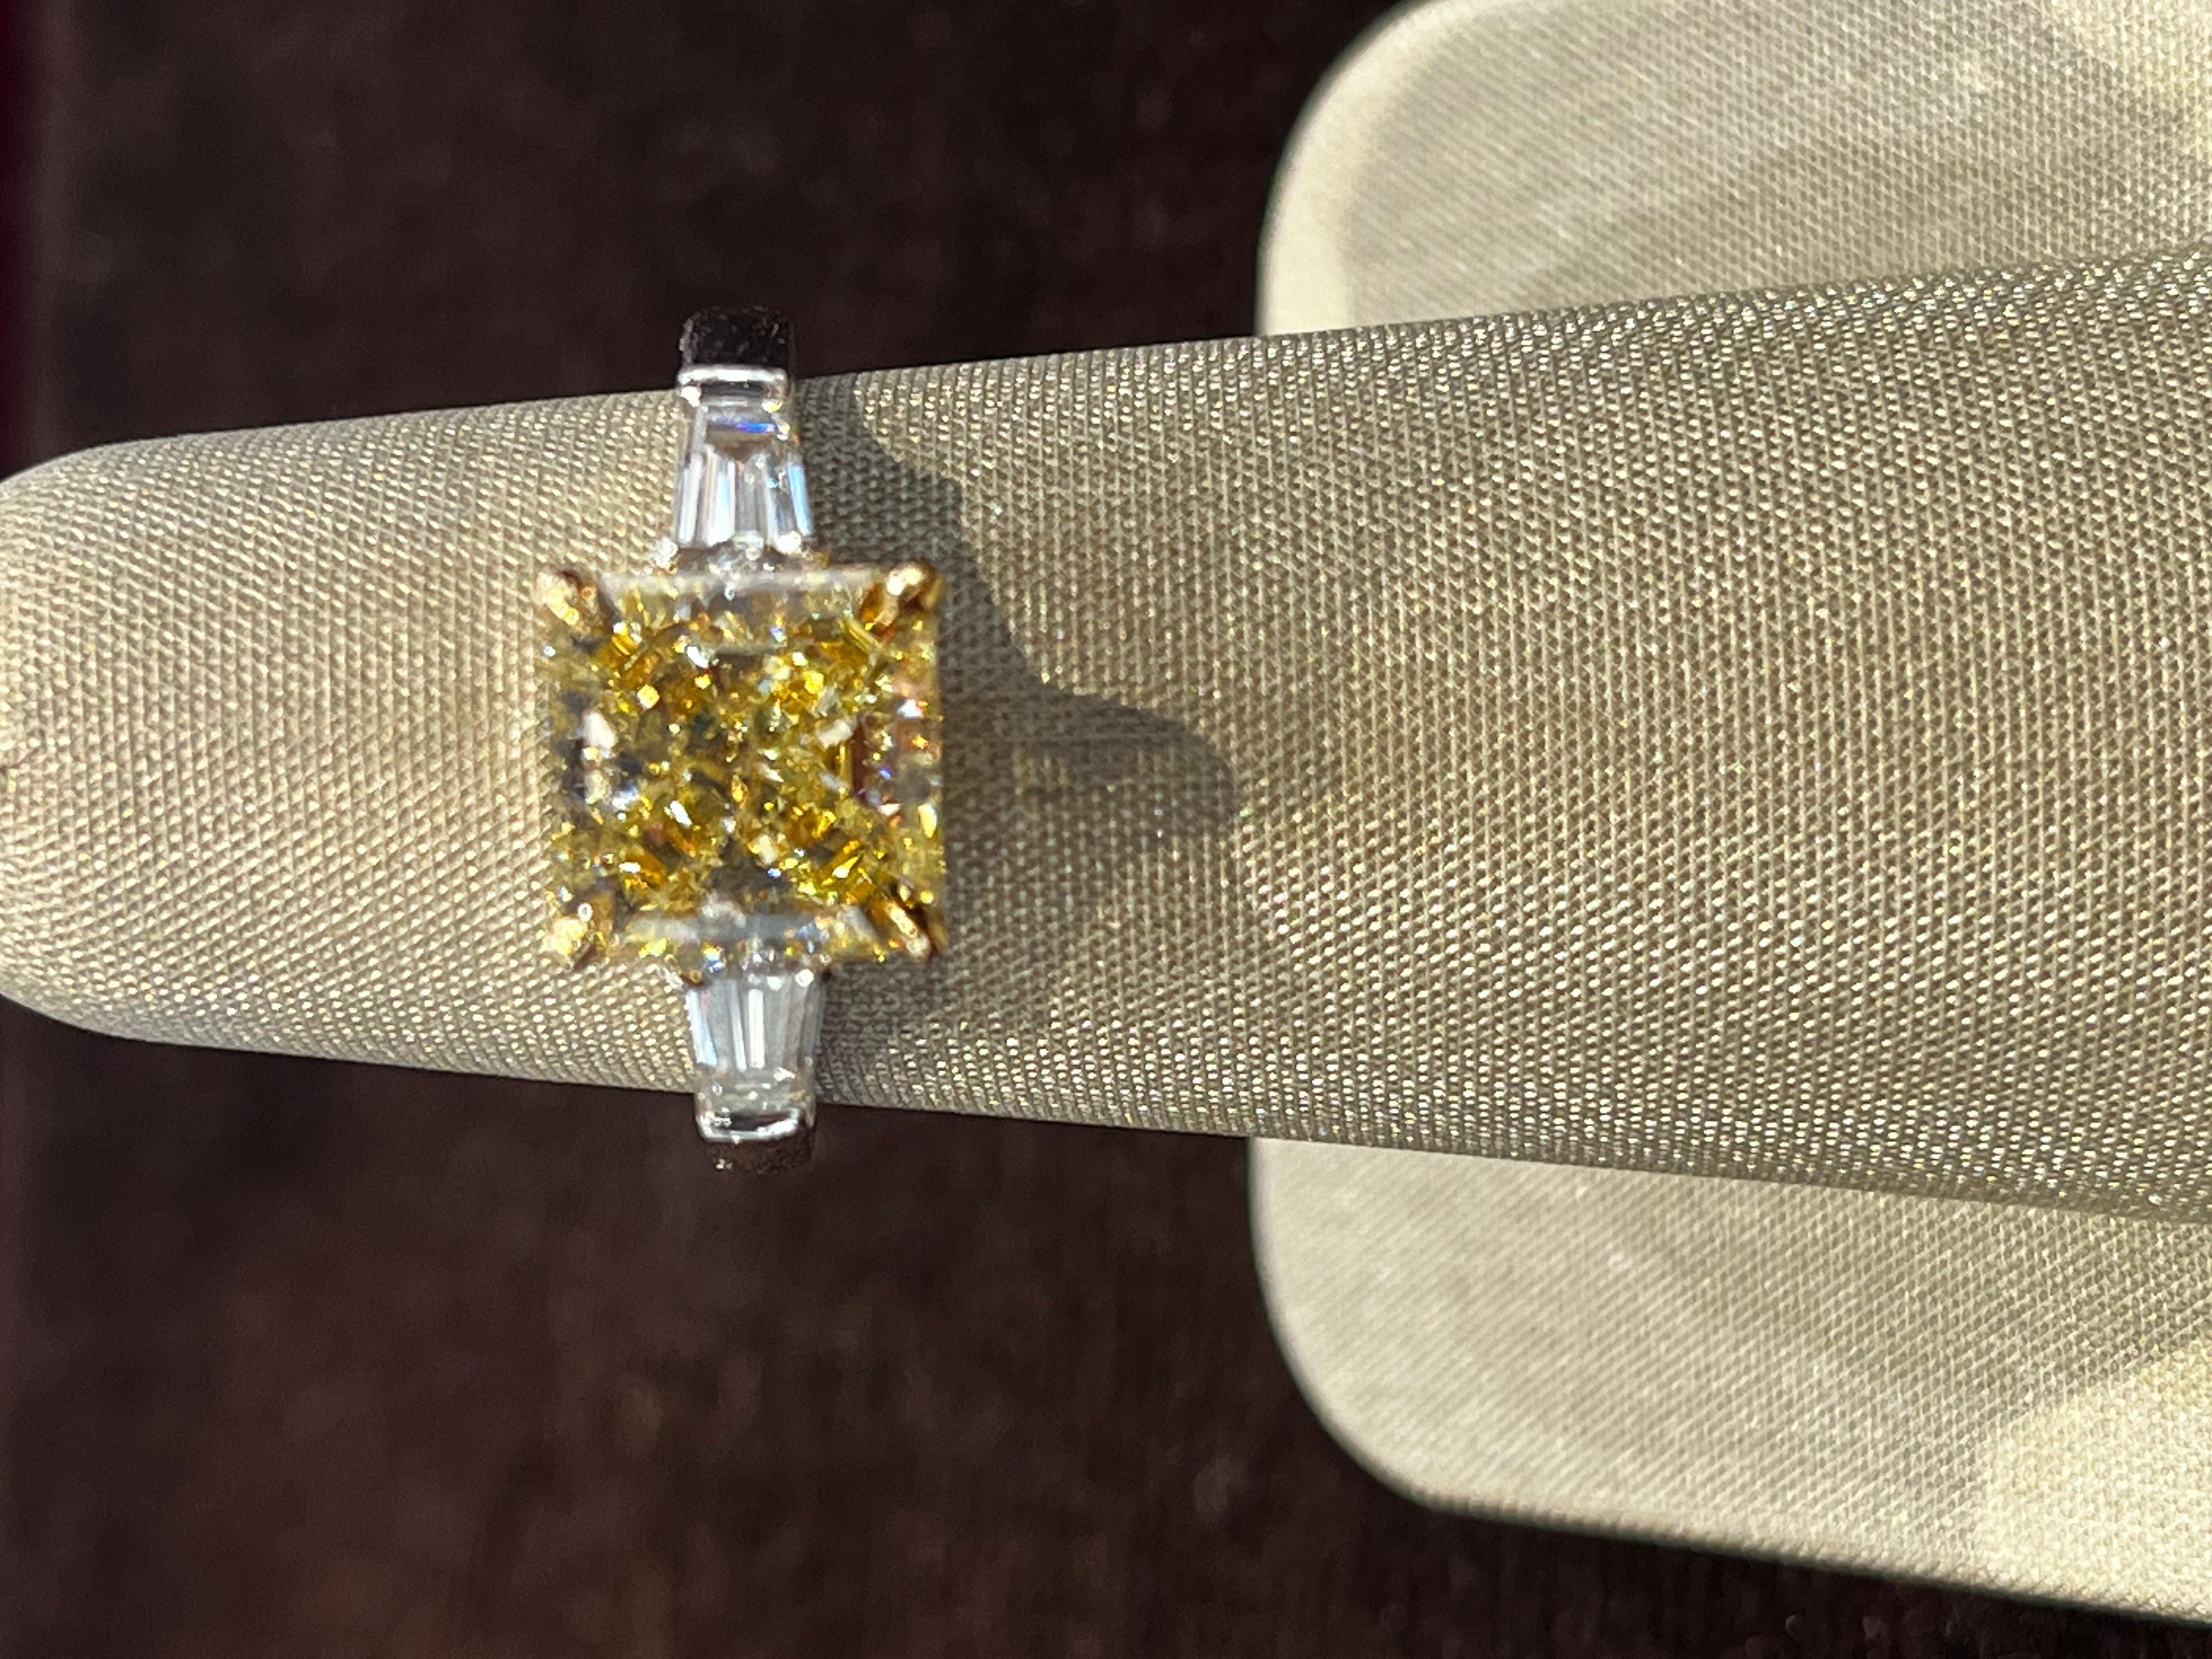 Stone: Diamond

Color: Fancy Light Yellow

Carat Weight: 3.03cts

Clarity: VVS1

Cut: Princess Cut

Metal: Platinum 950 and 18k Yellow Gold

Measurements: 8.08 x 8.01 x 5.27

Side stones: 0.52 total carat weight E color, VS1 clarity